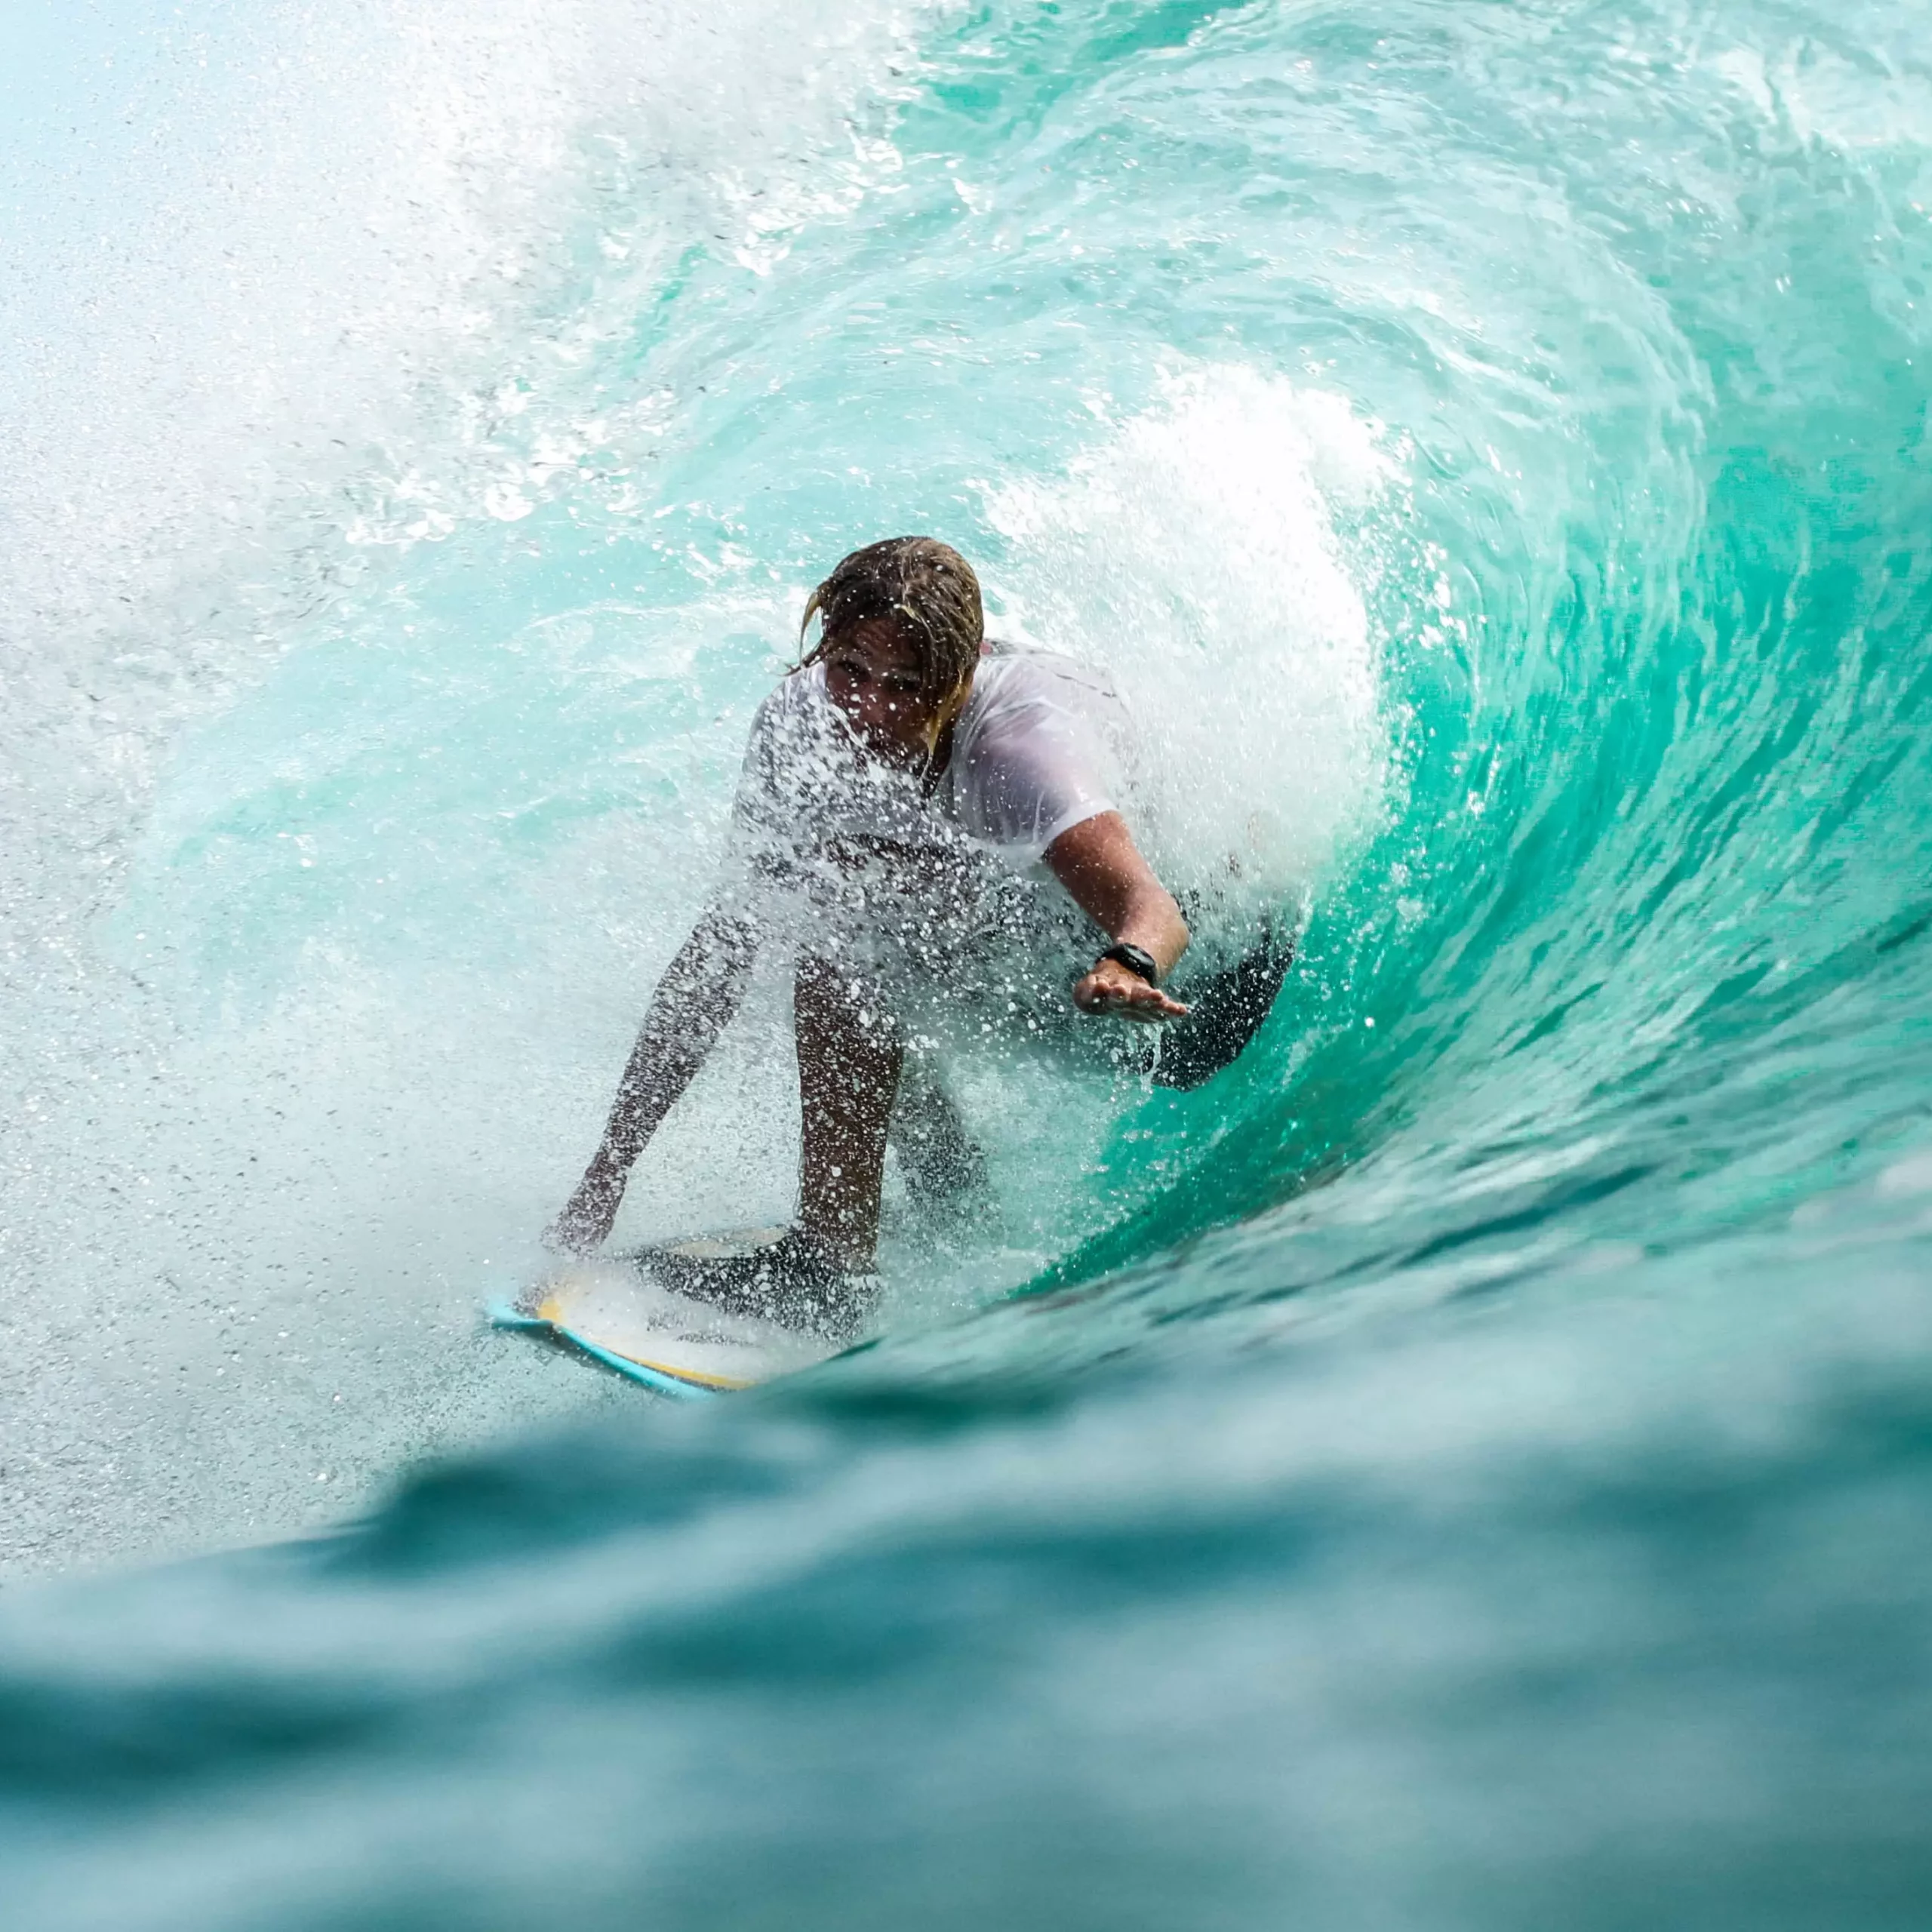 Best Water Sports in Bali - Surfing